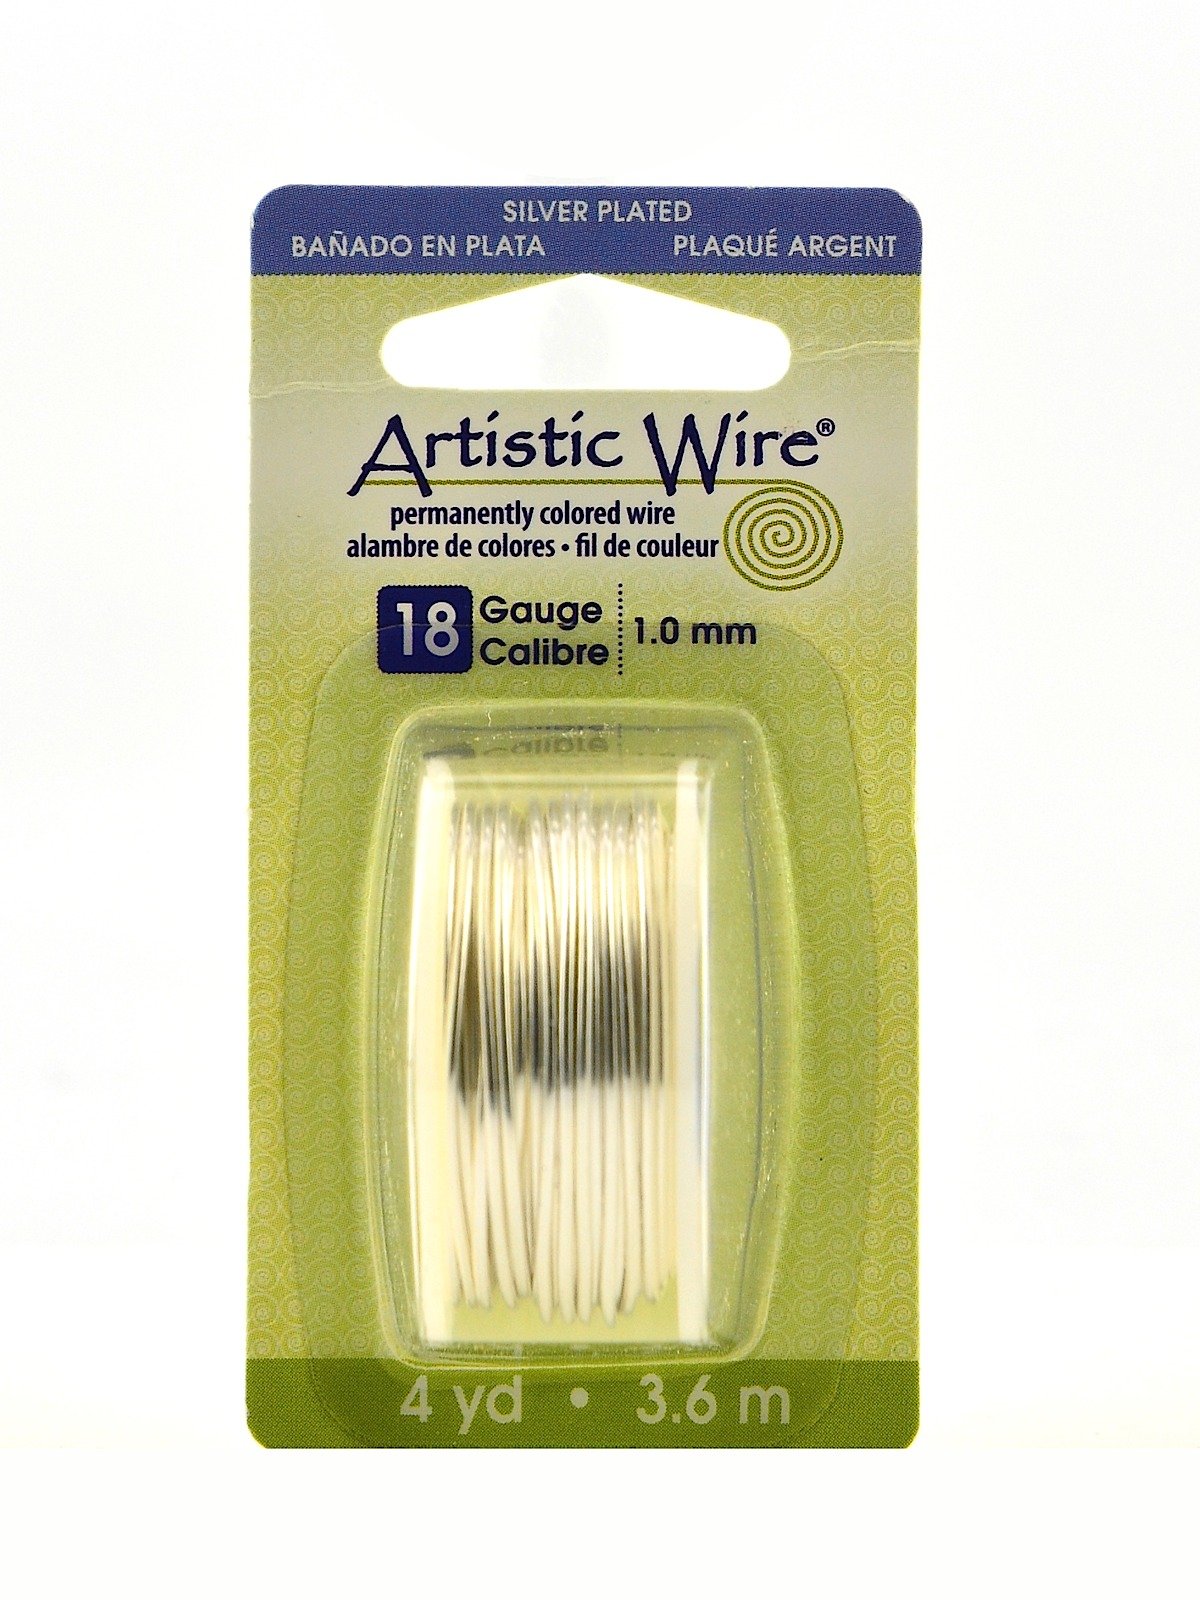 Artistic Wire - Dispenser Packs